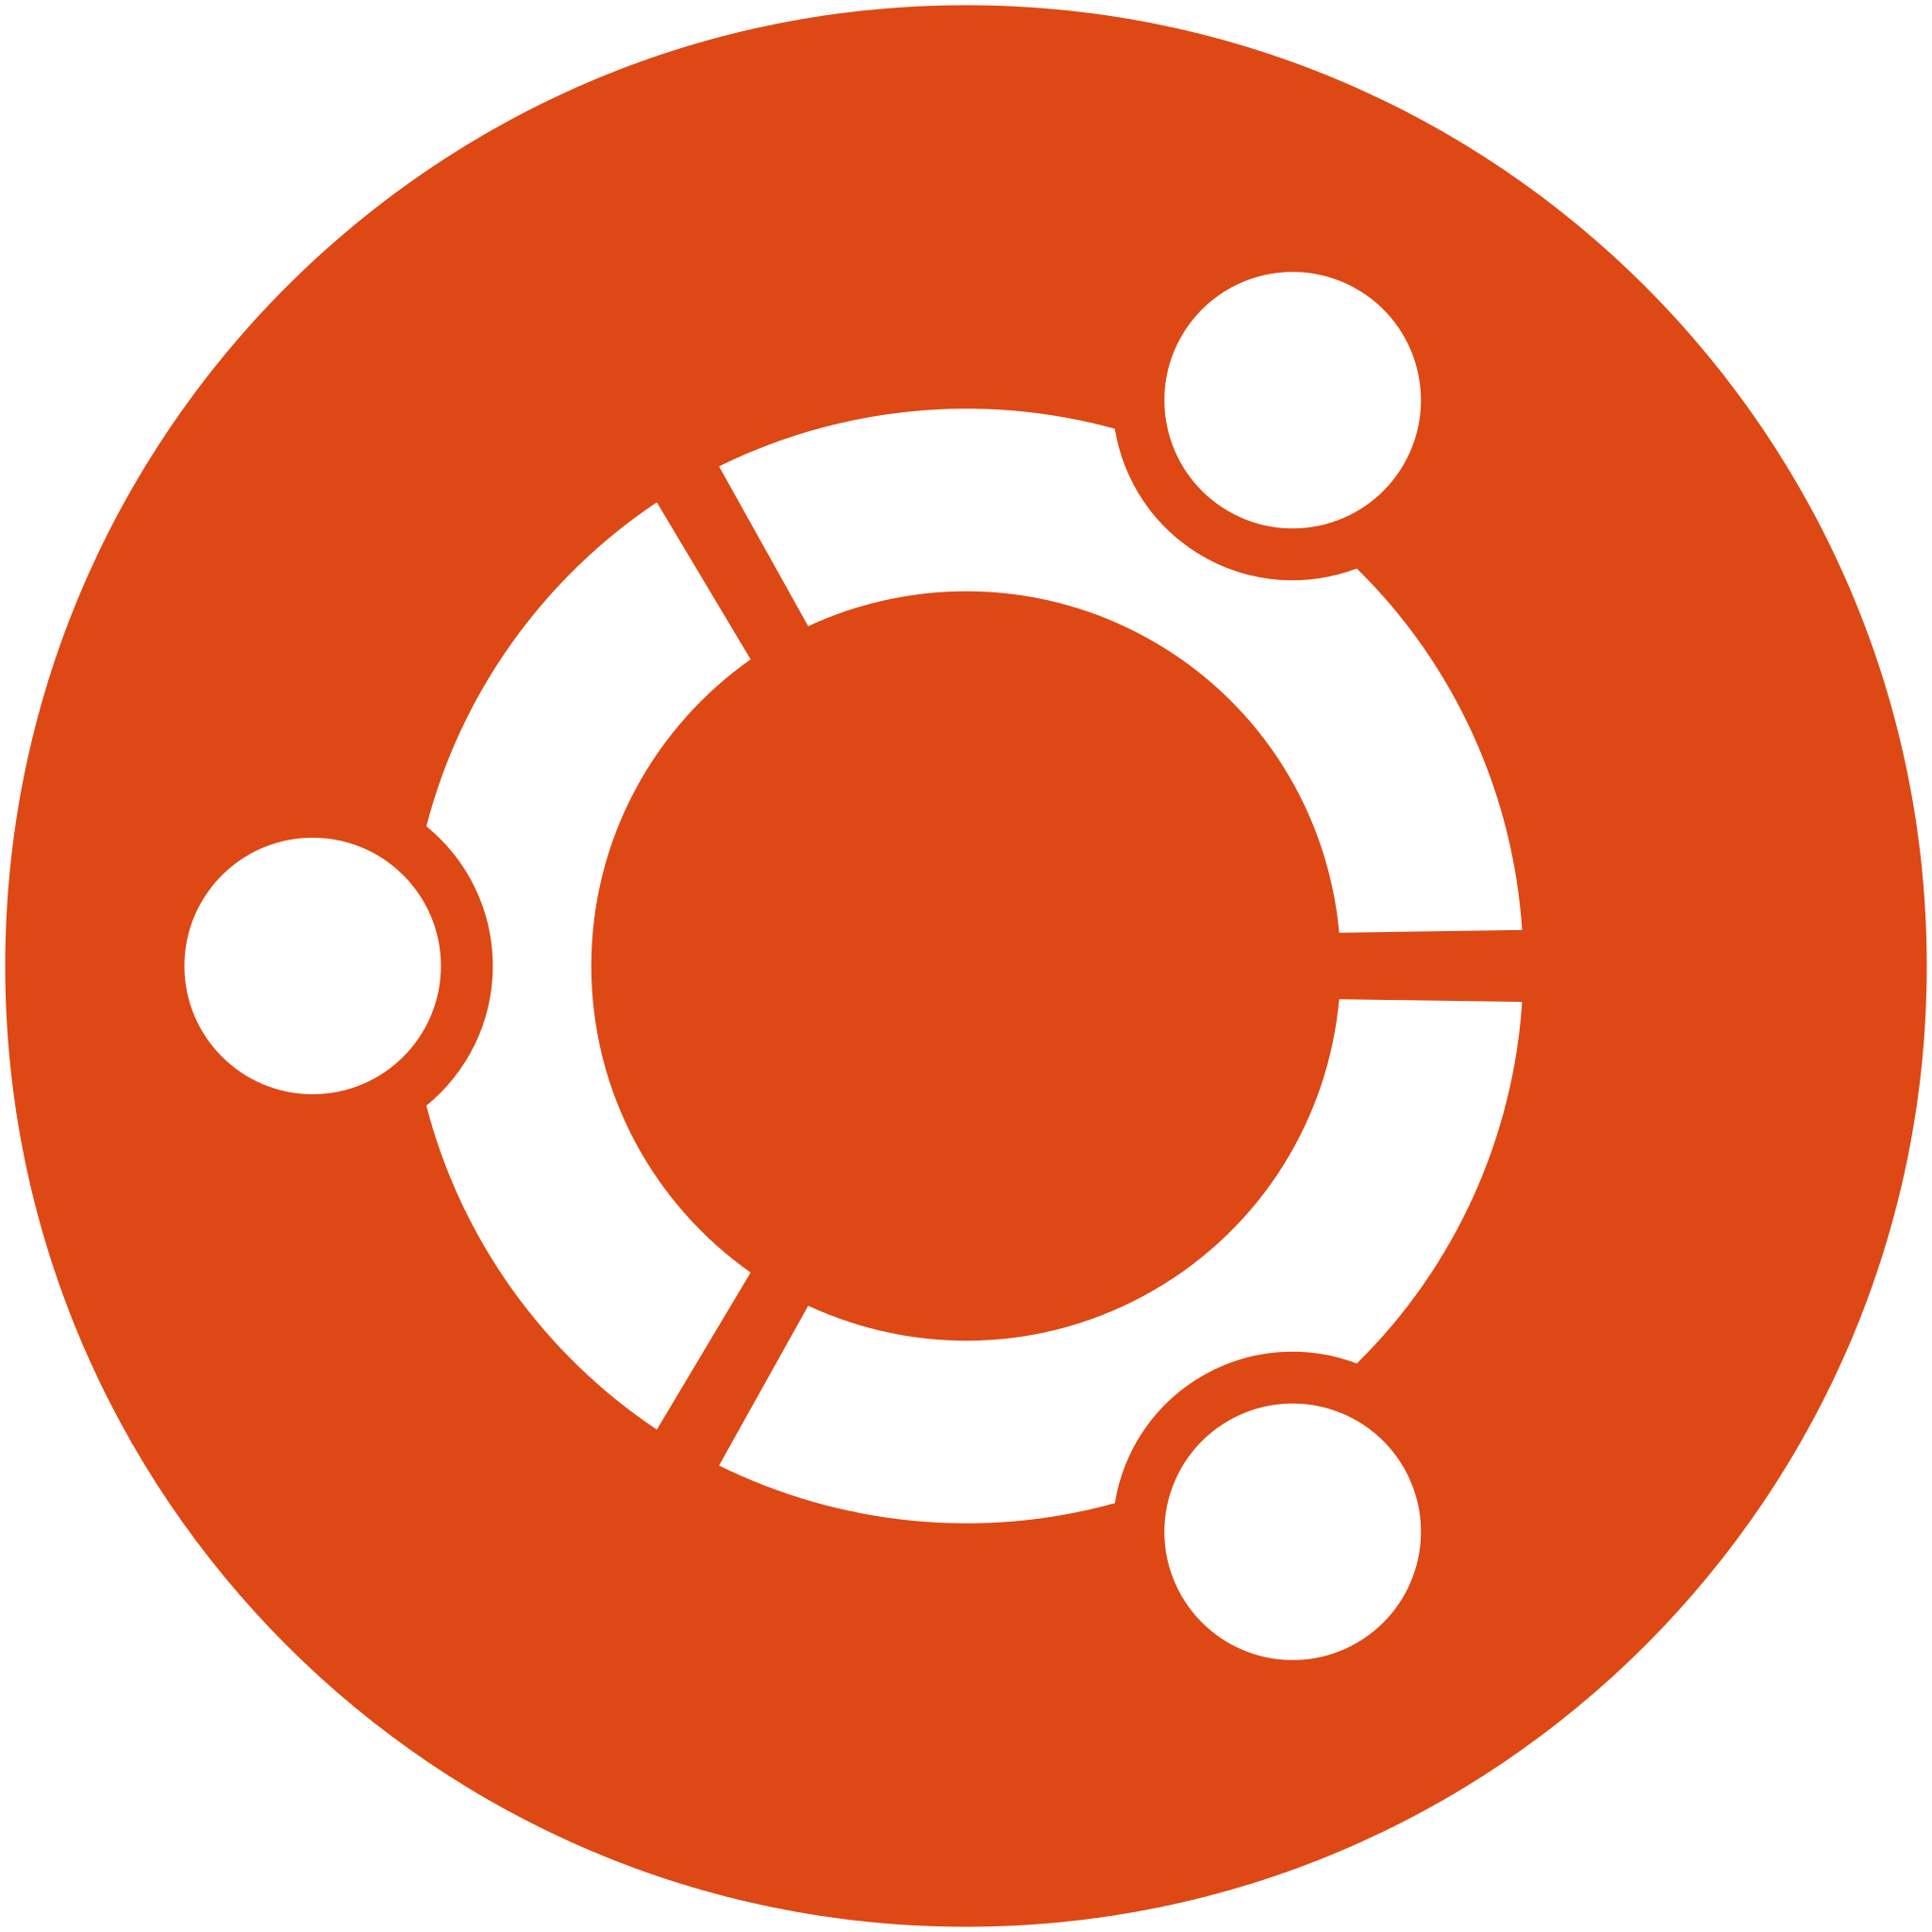 ubuntu image